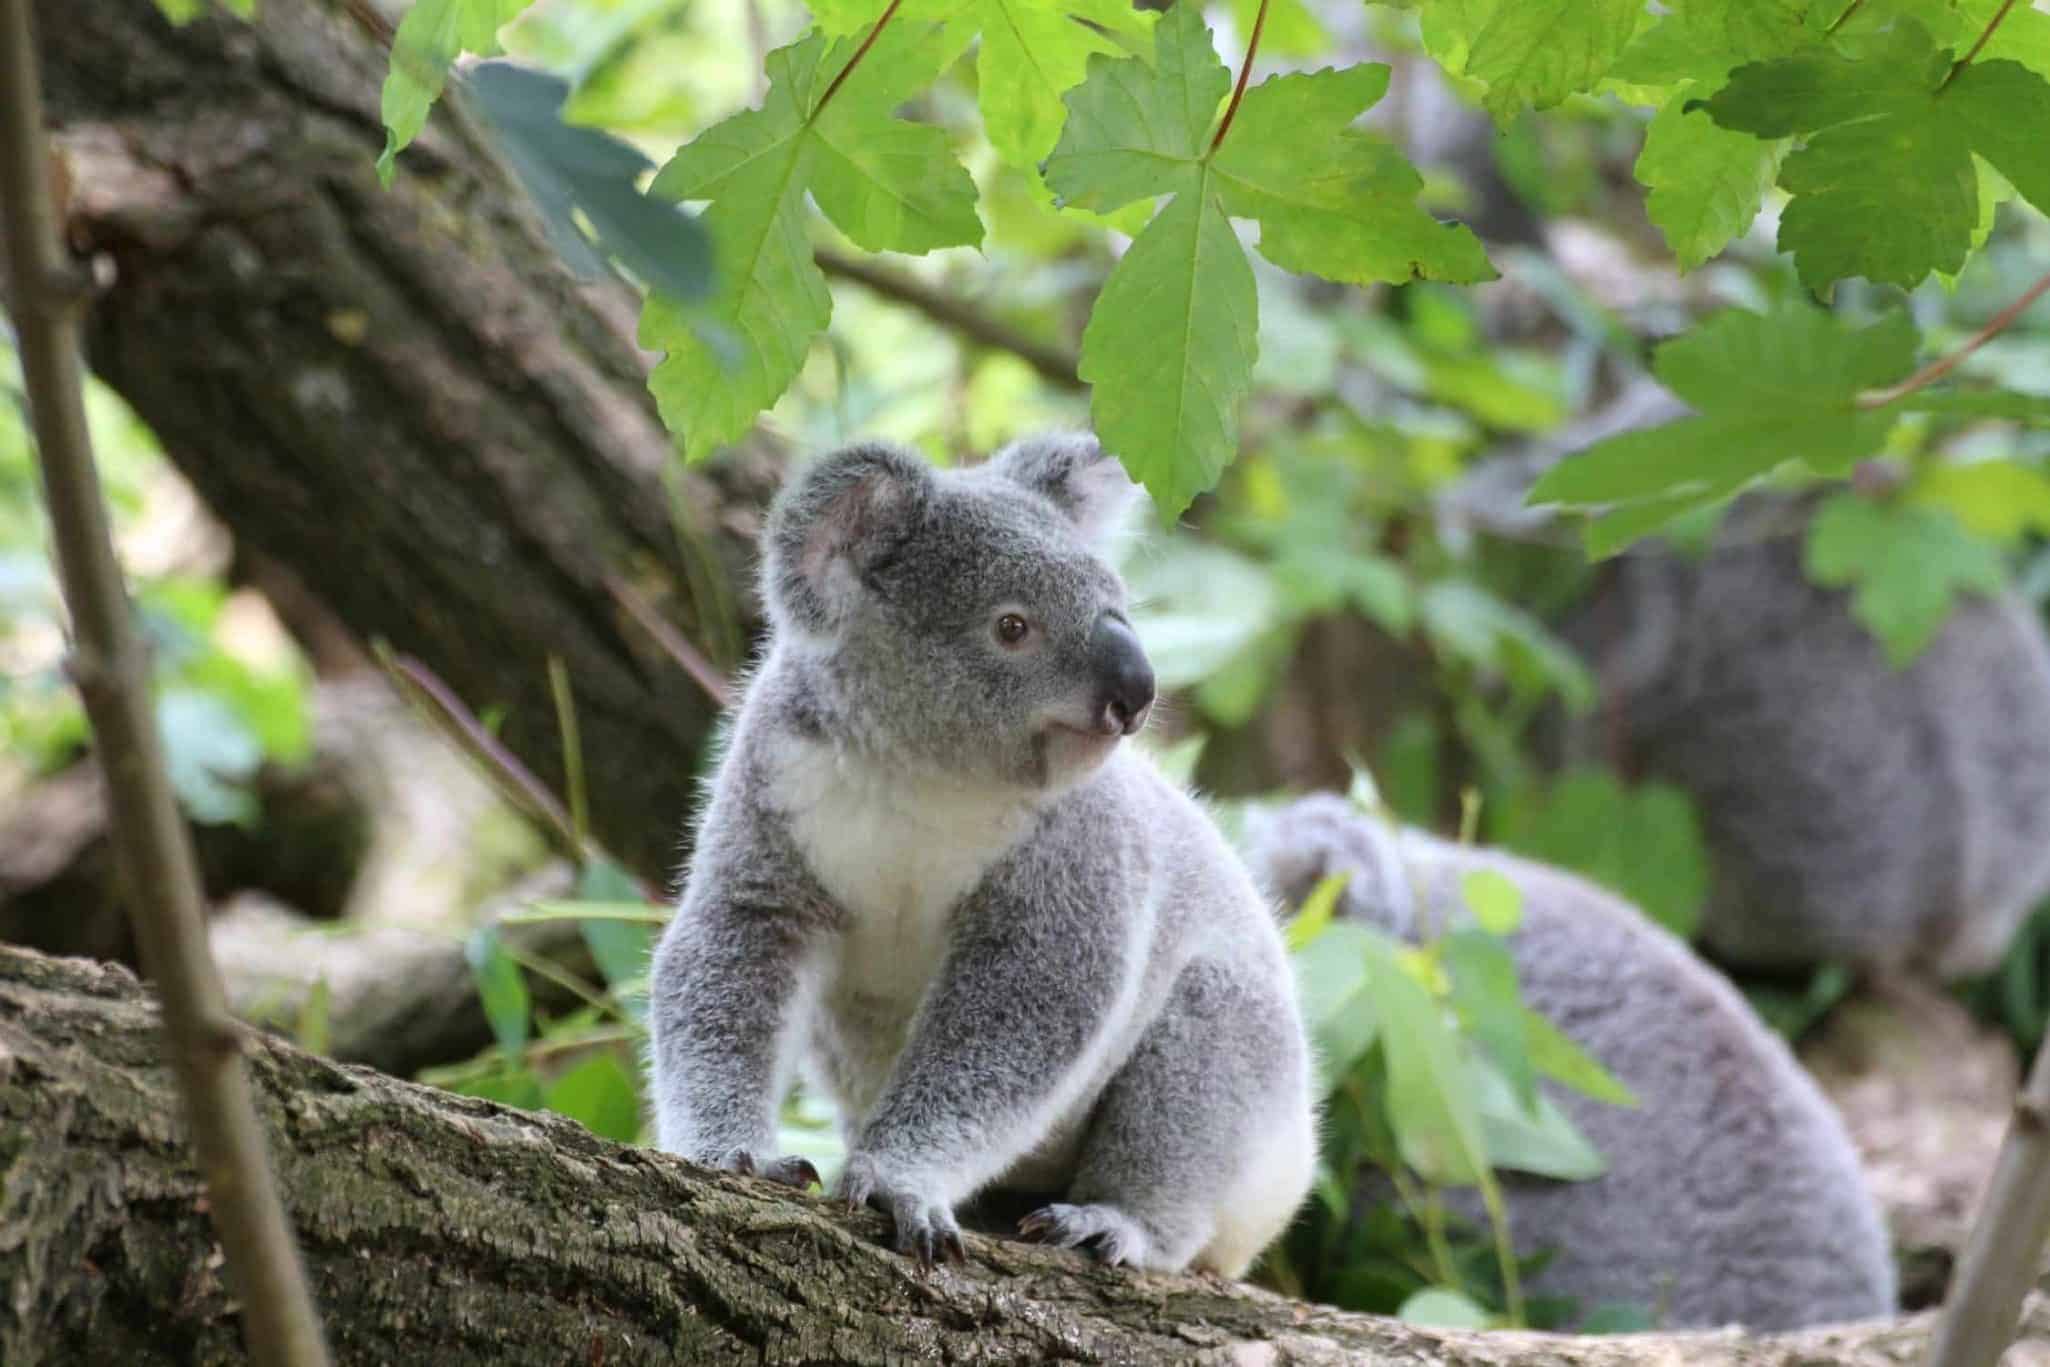 Where can you see Koalas